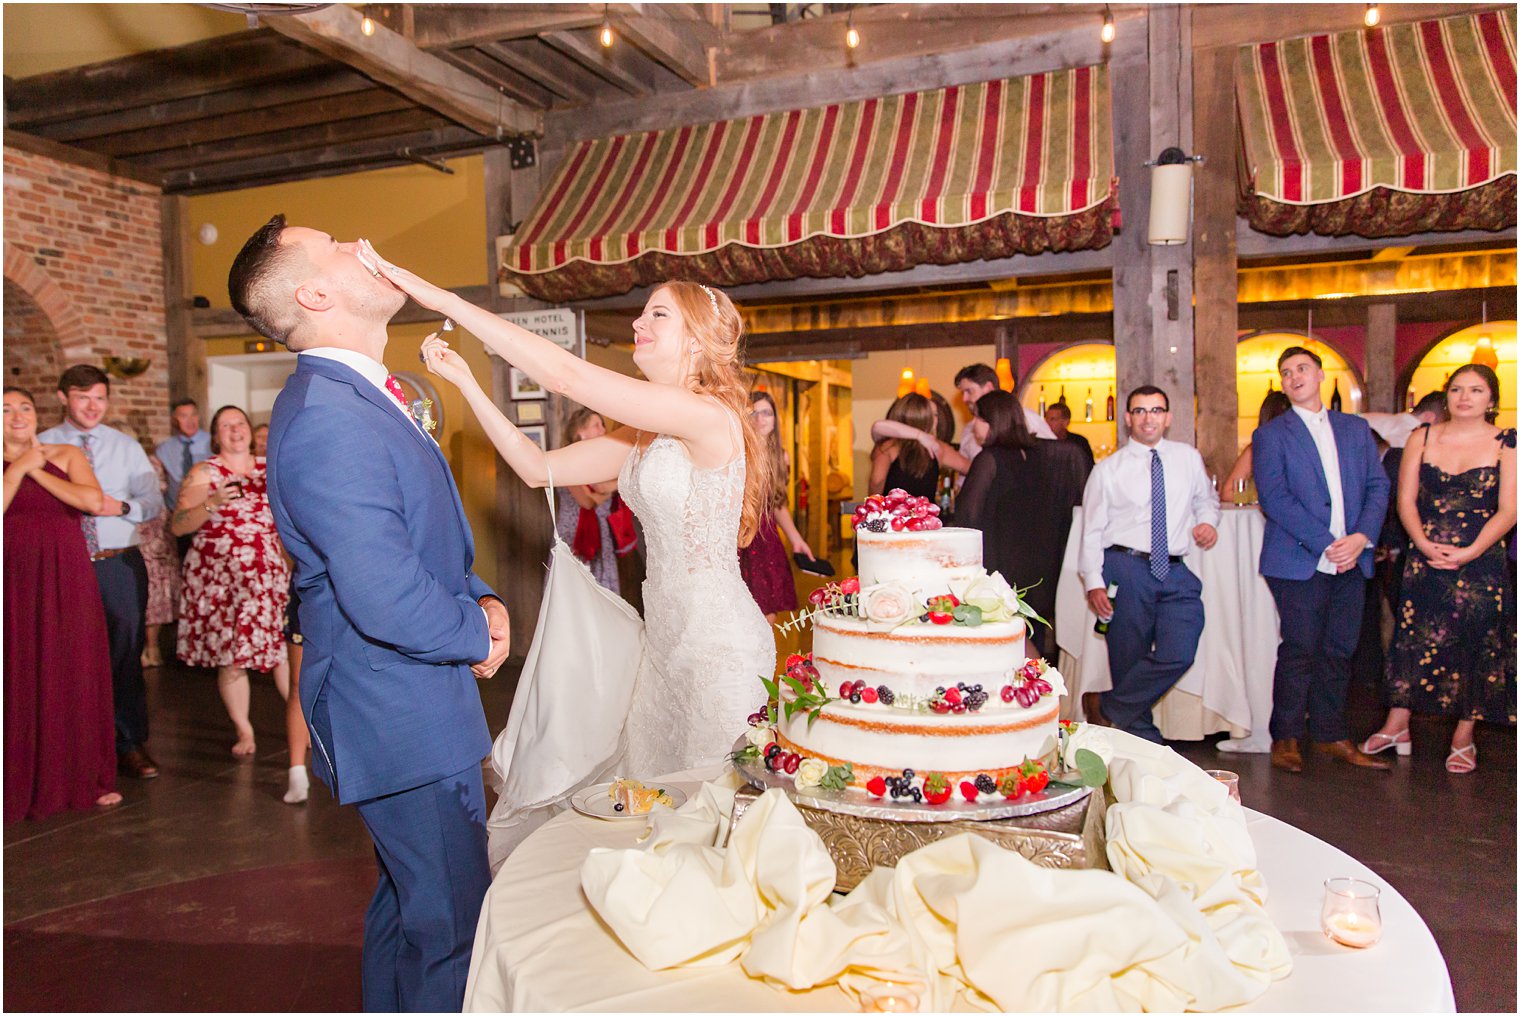 Cake cutting during wedding at Laurita Winery